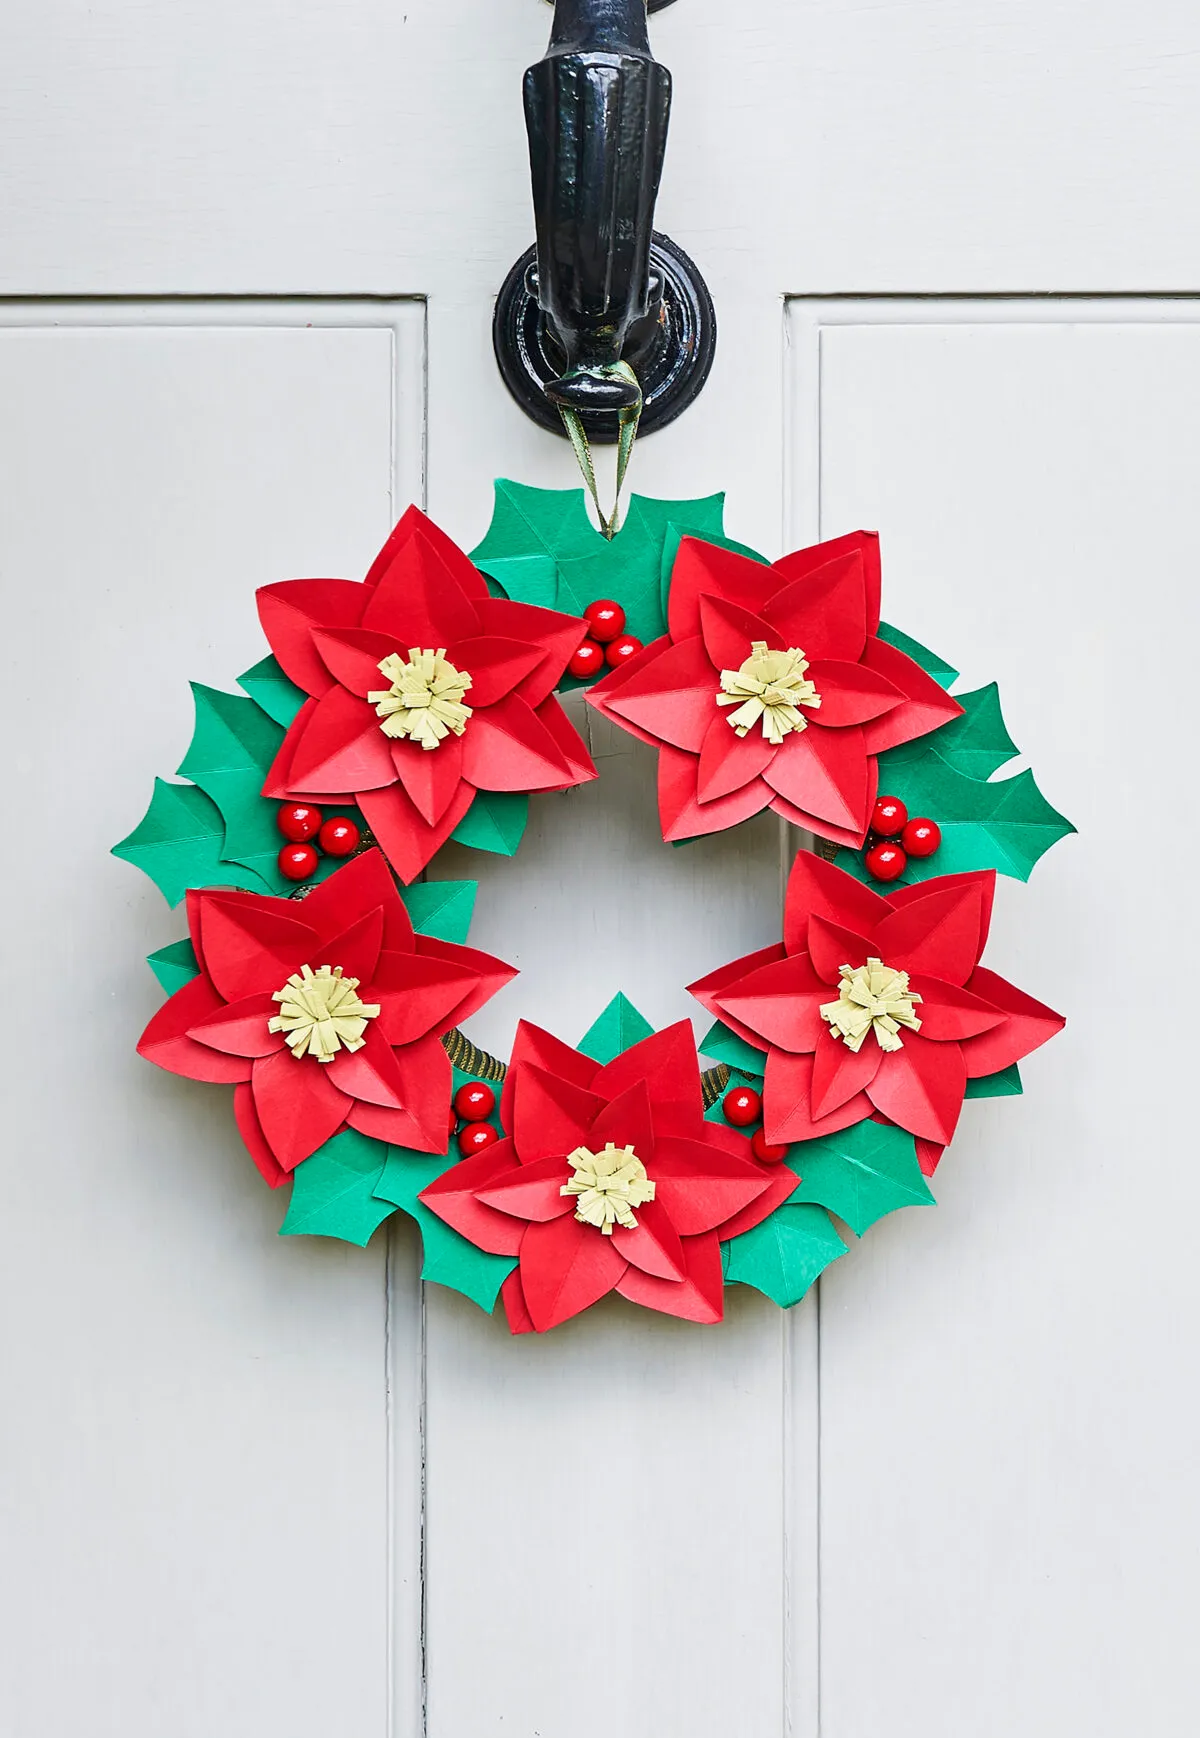 How to make a poinsettia wreath - portrait